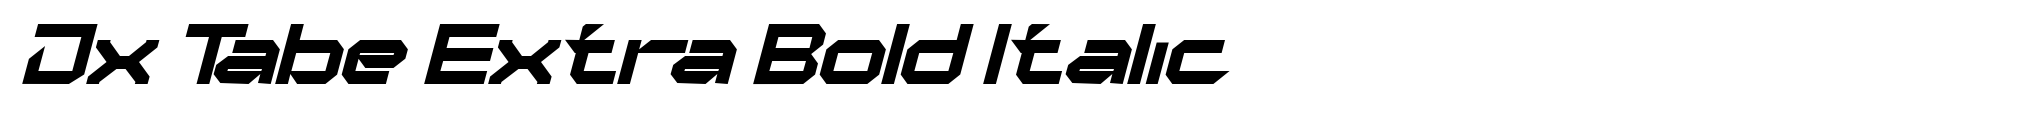 Jx Tabe Extra Bold Italic image